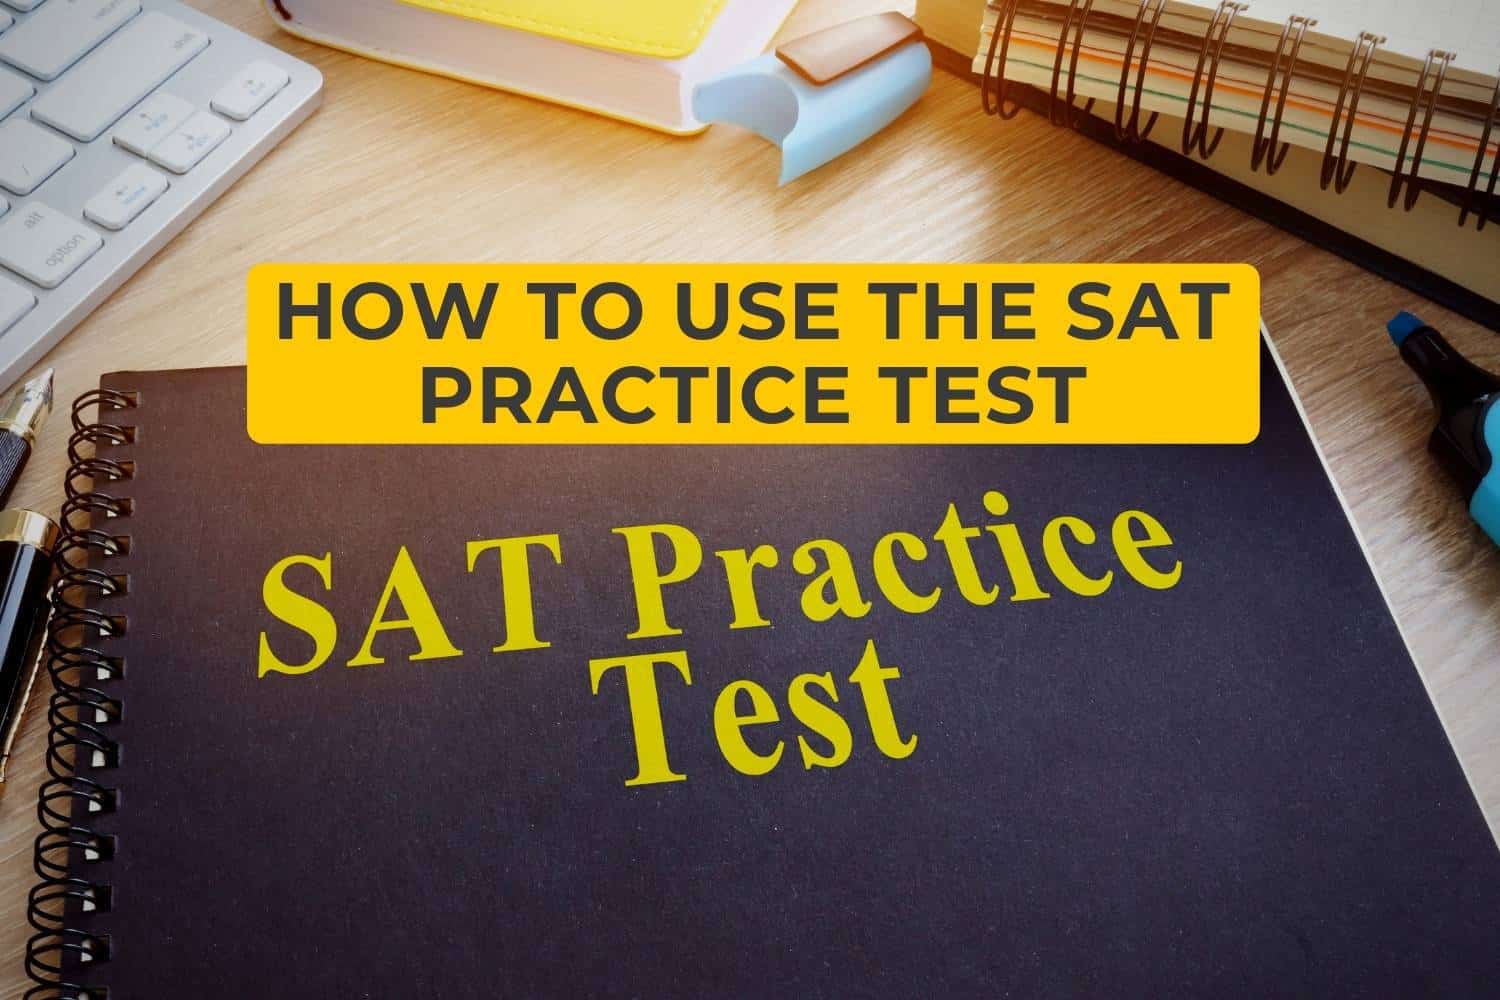 Sat practice test